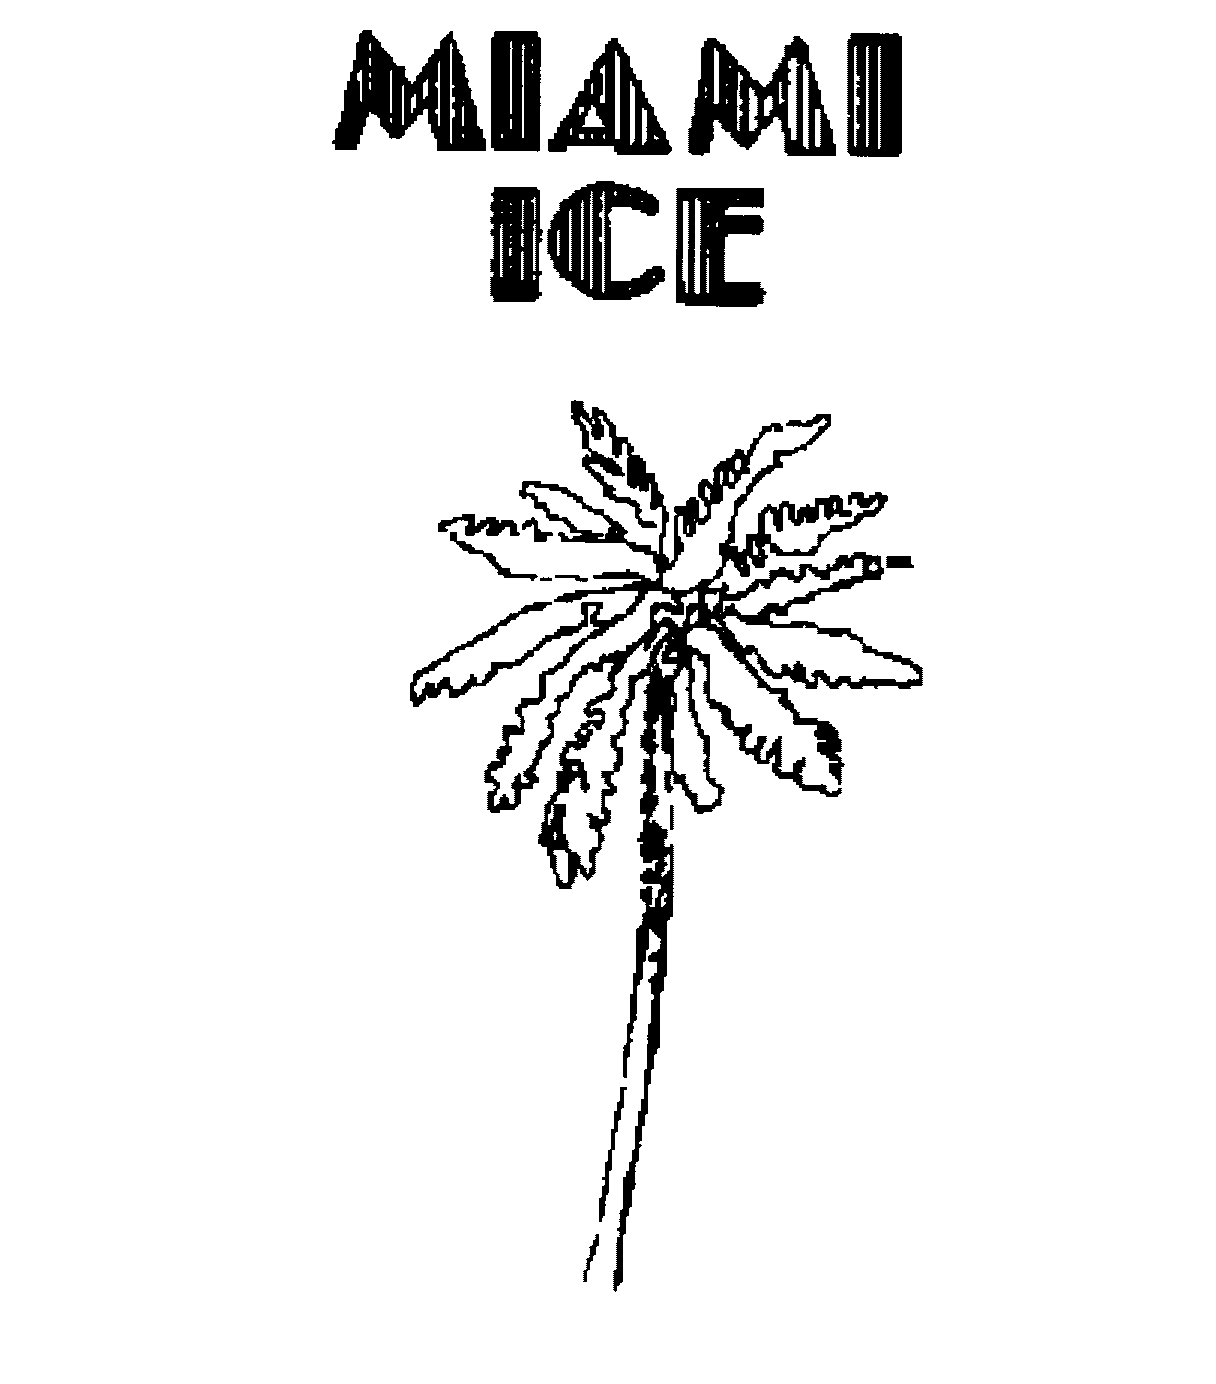 MIAMI ICE